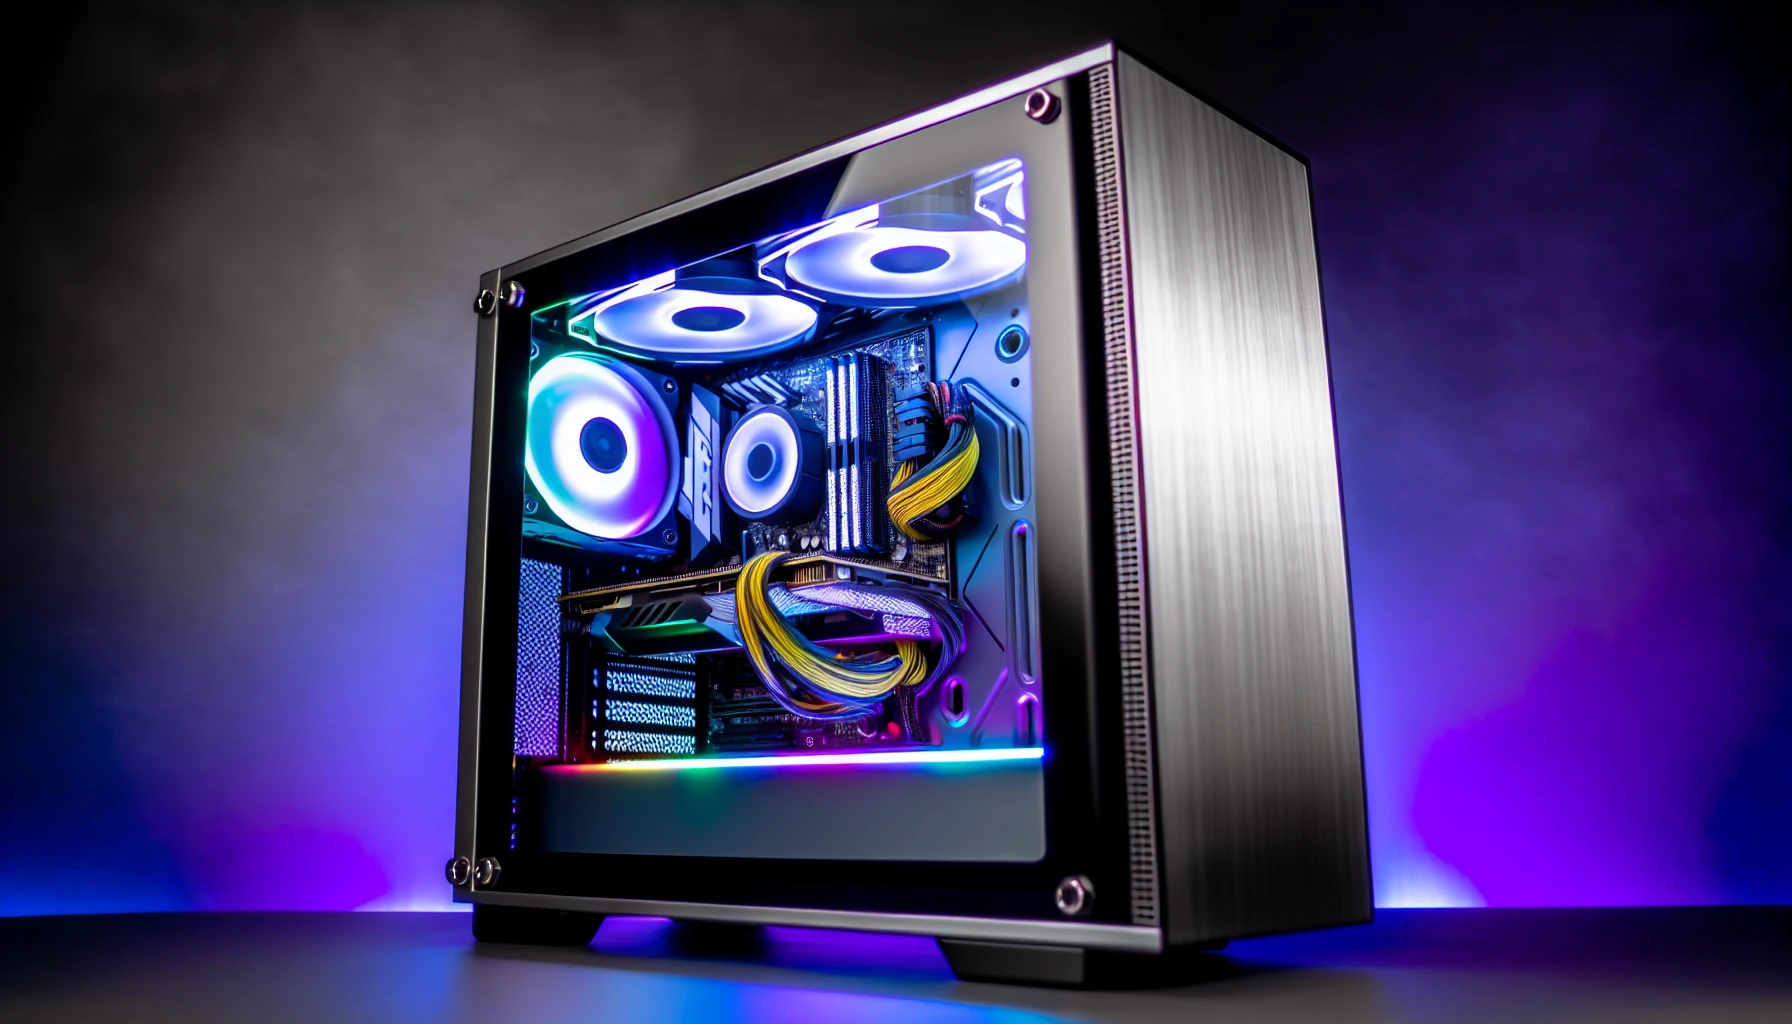 Sleek and modern gaming PC design with customizable RGB lighting